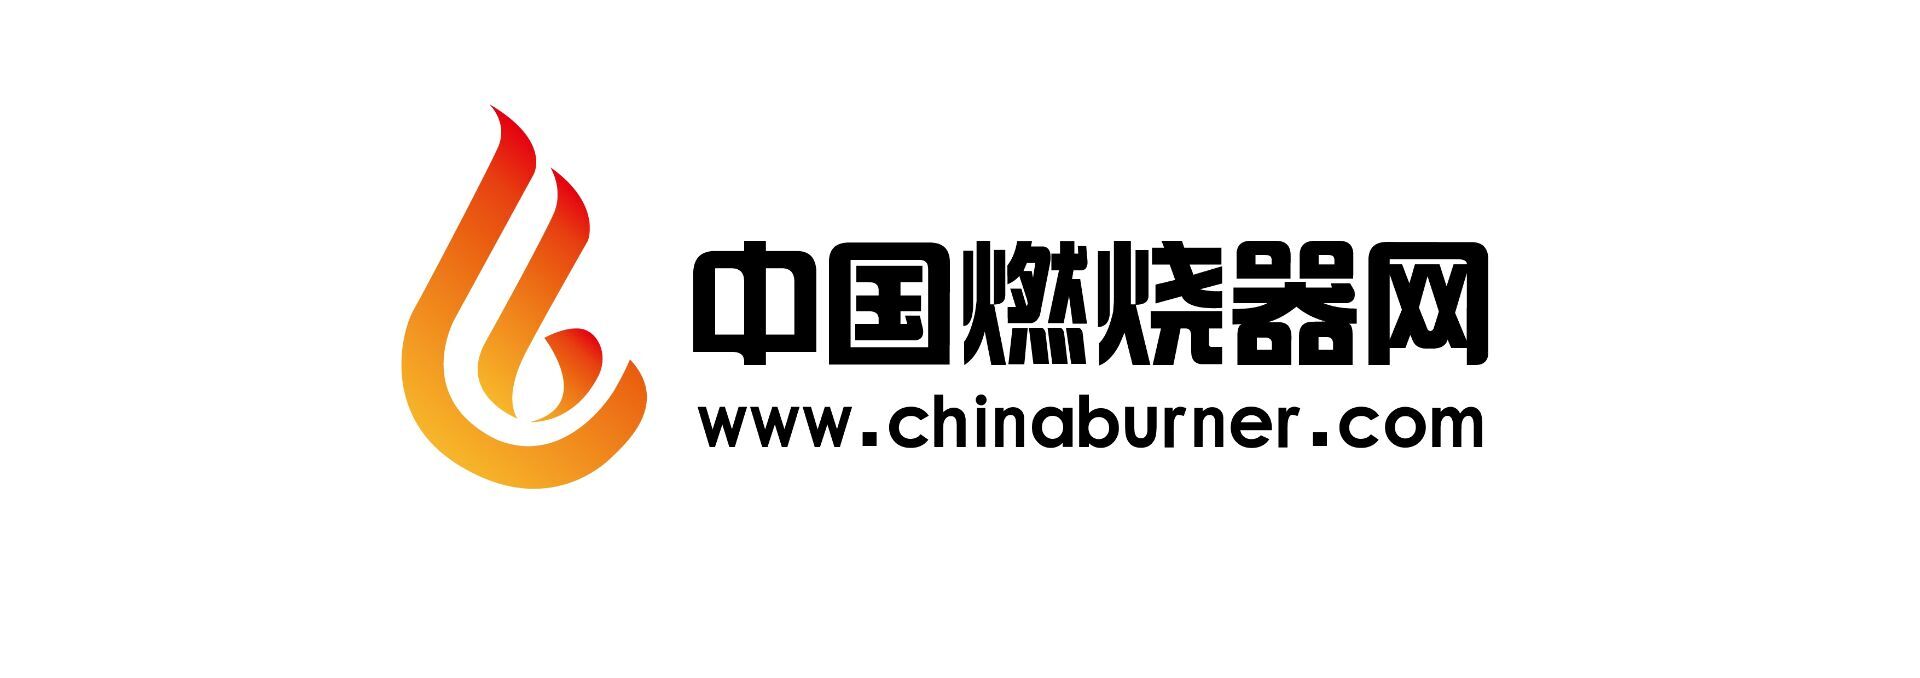 www.chinaburner.com